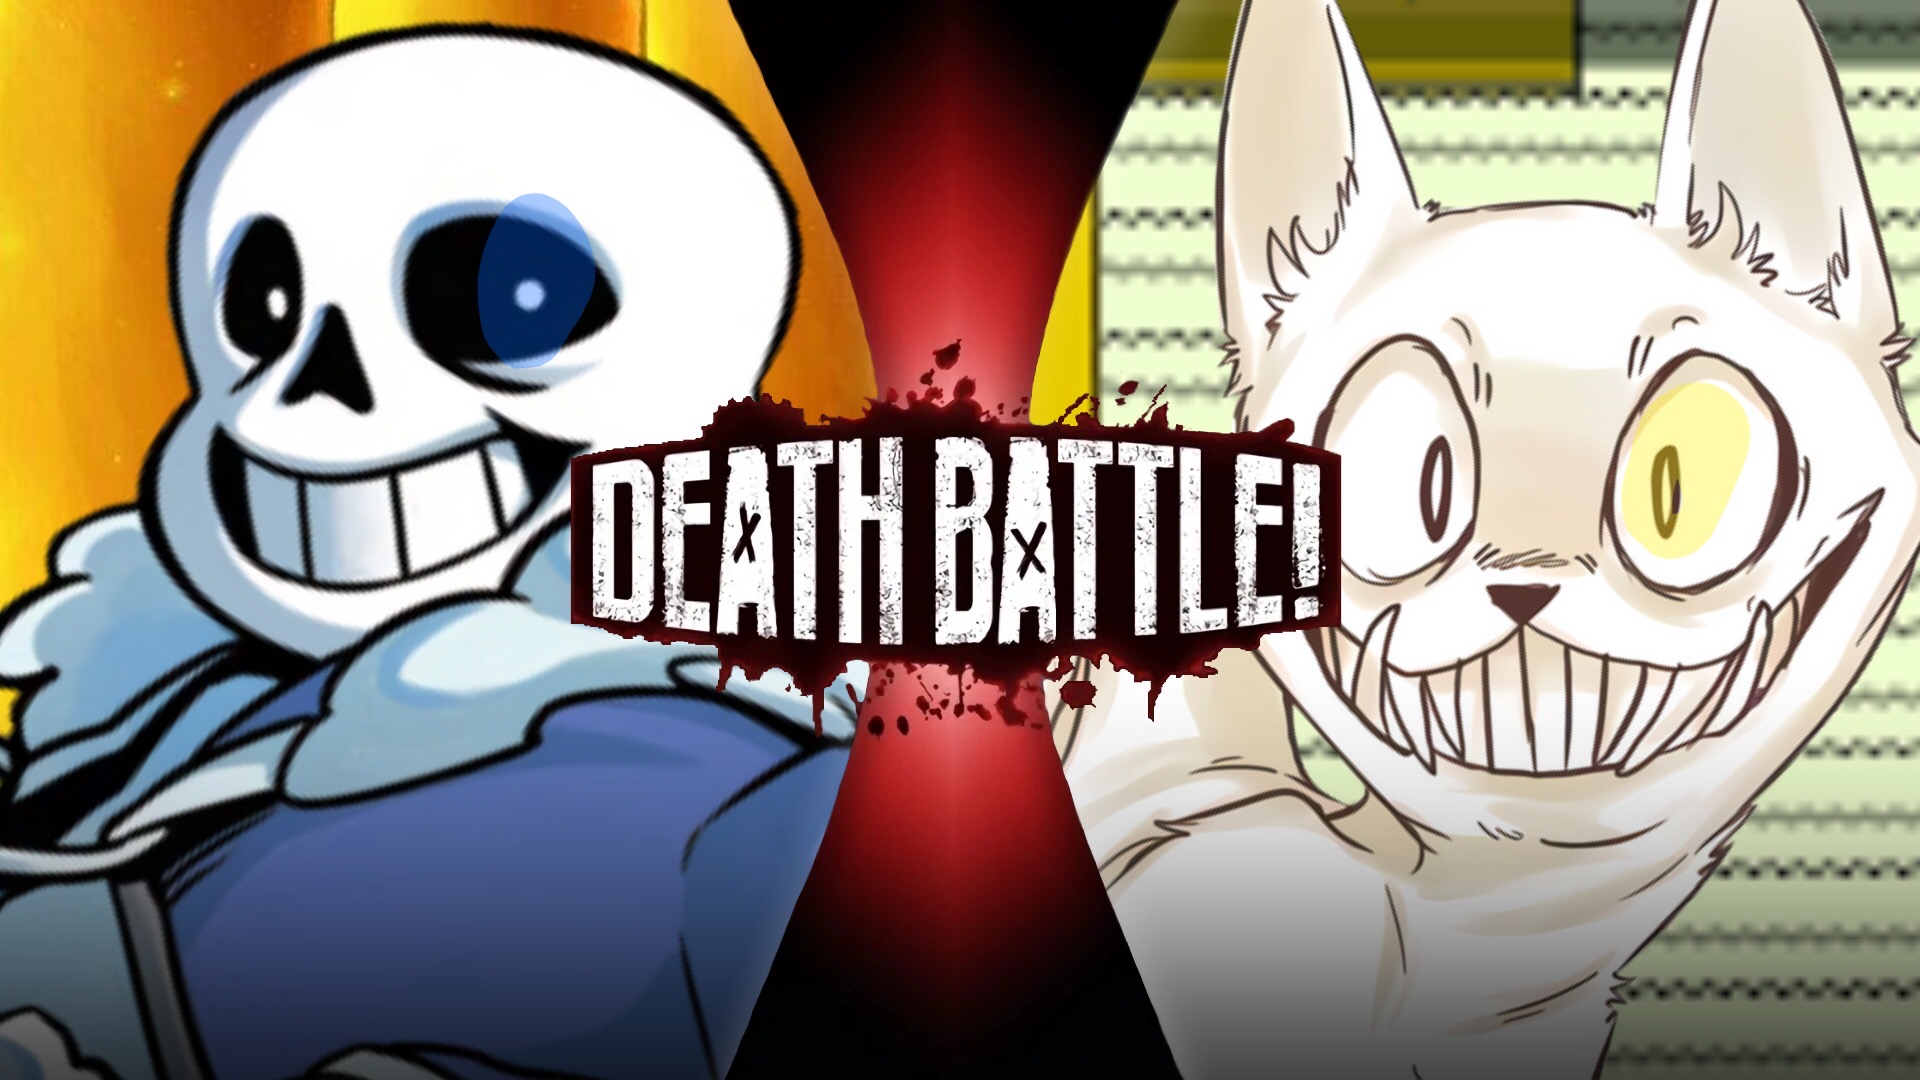 Sans VS The Judge - DEATH BATTLE! Sprite Art by HatsuTheGoat on DeviantArt